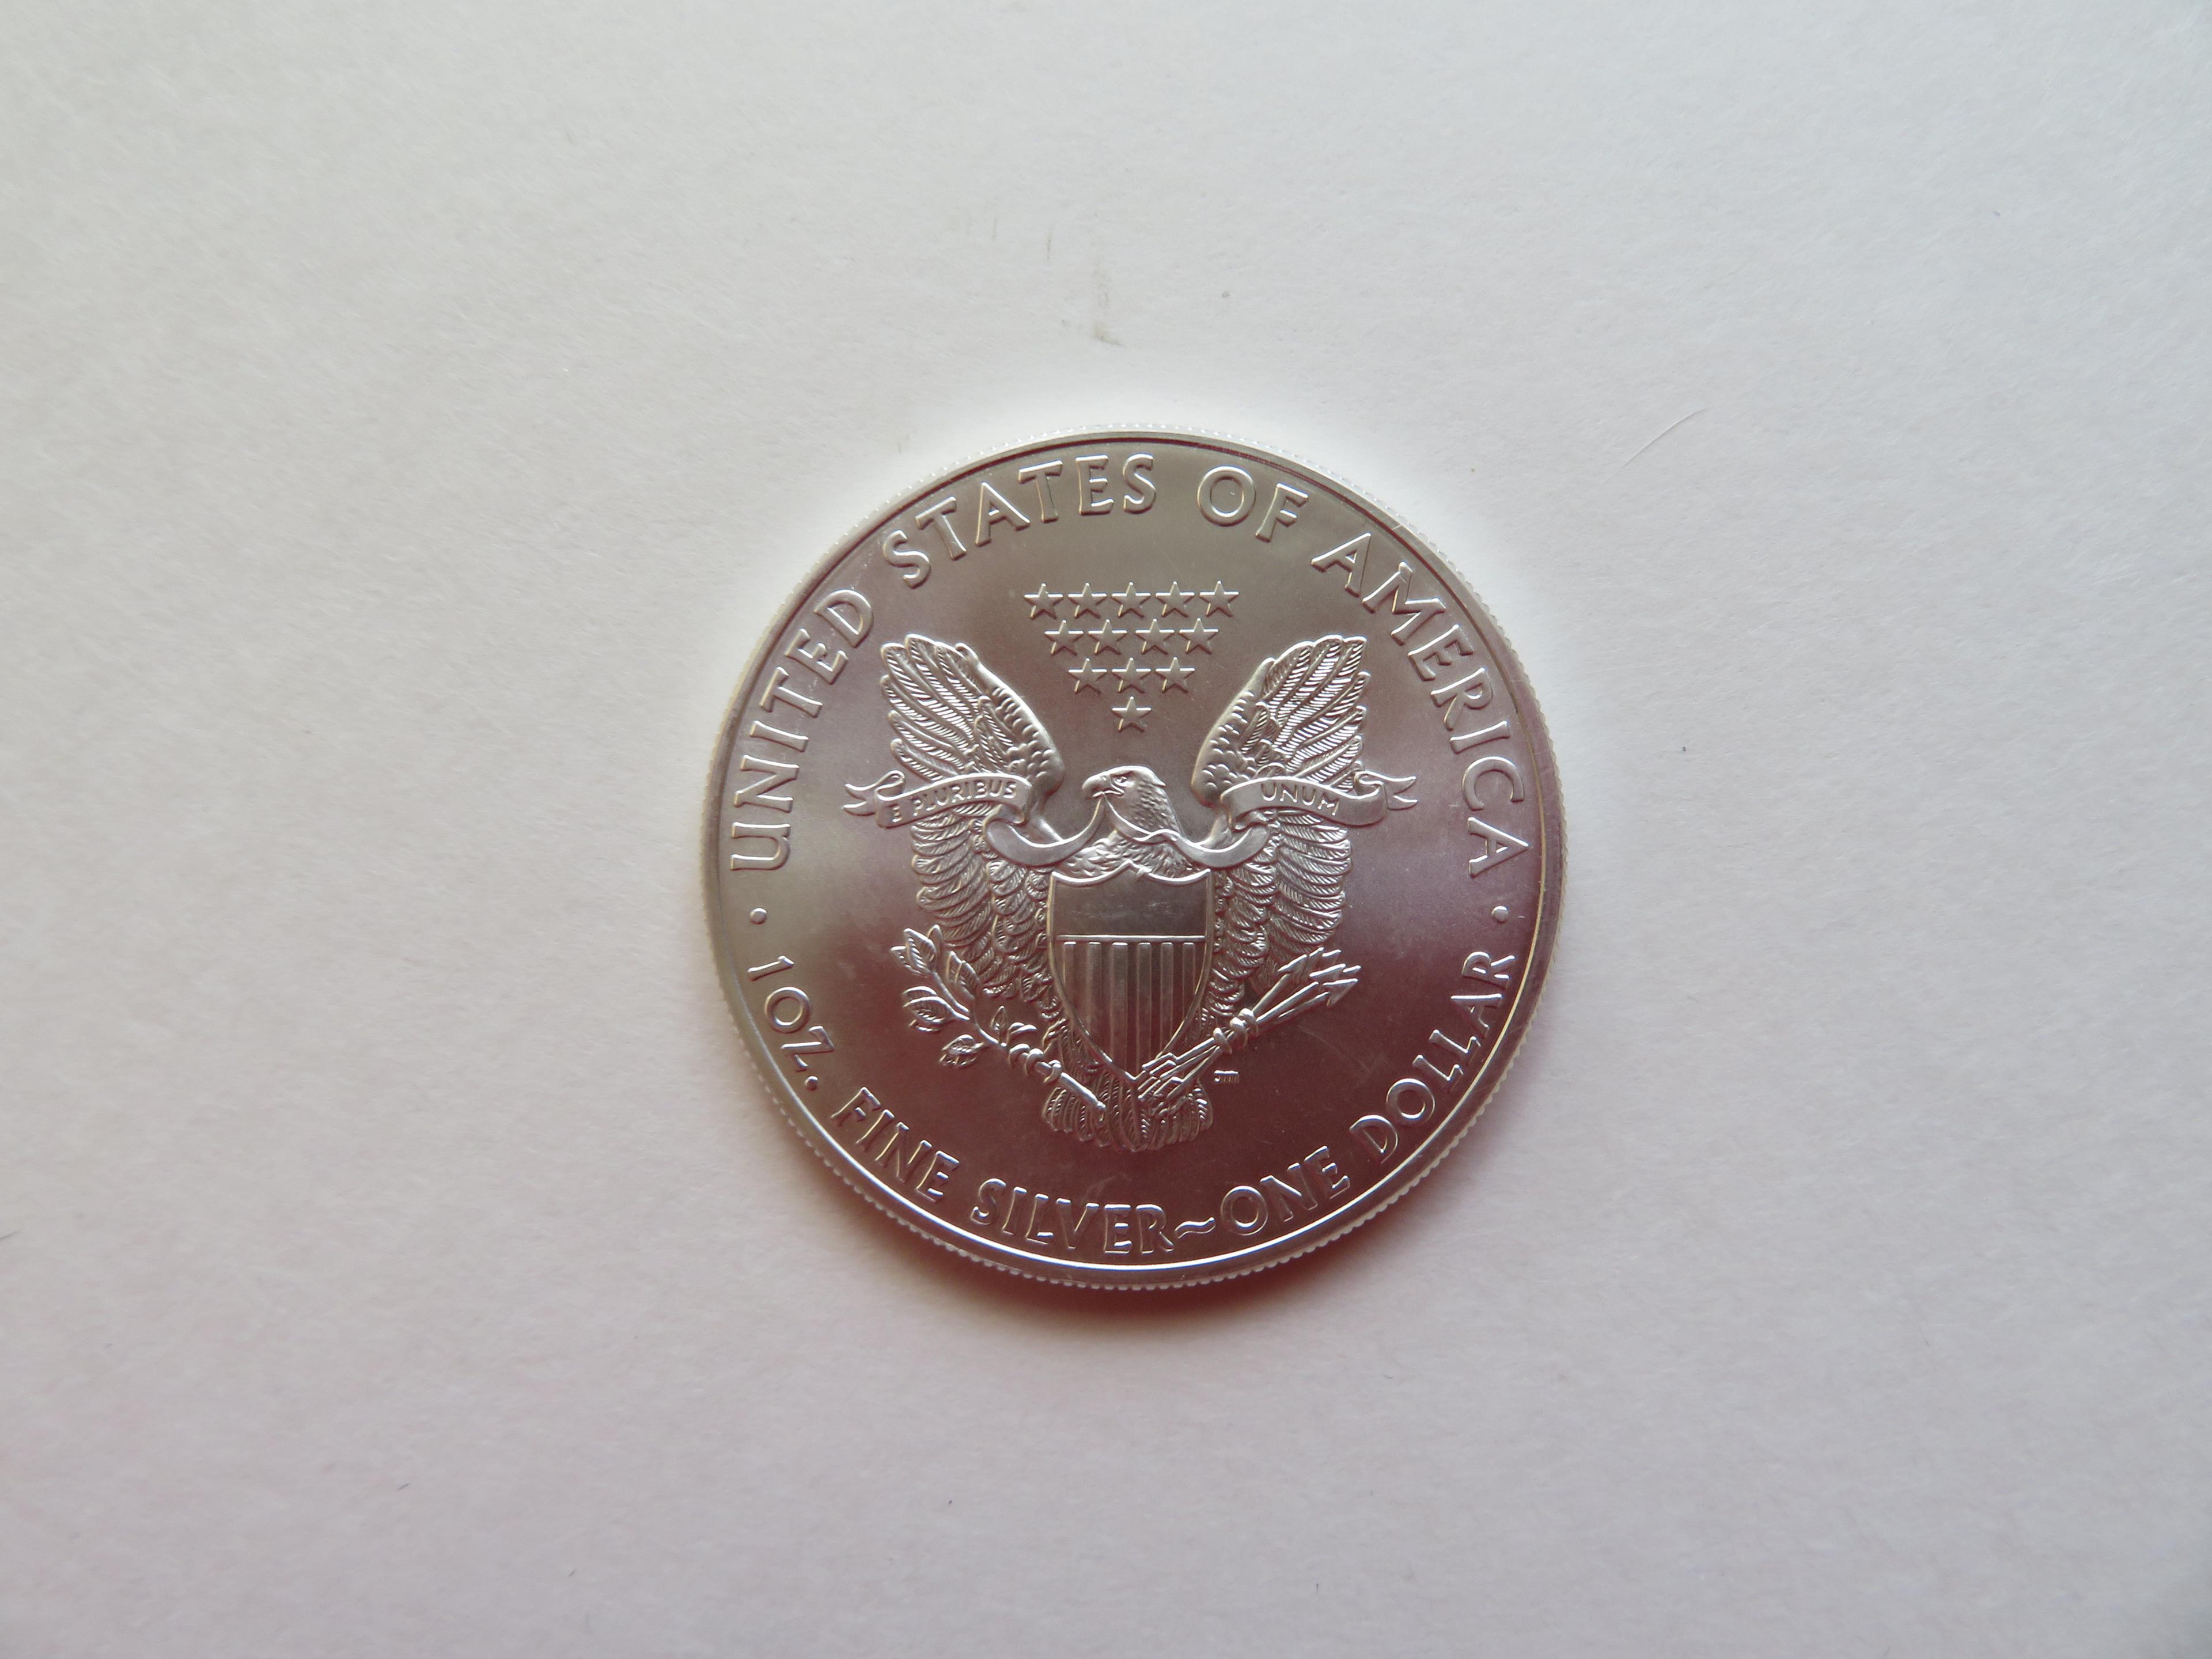 $1 US 2012 American Eagle